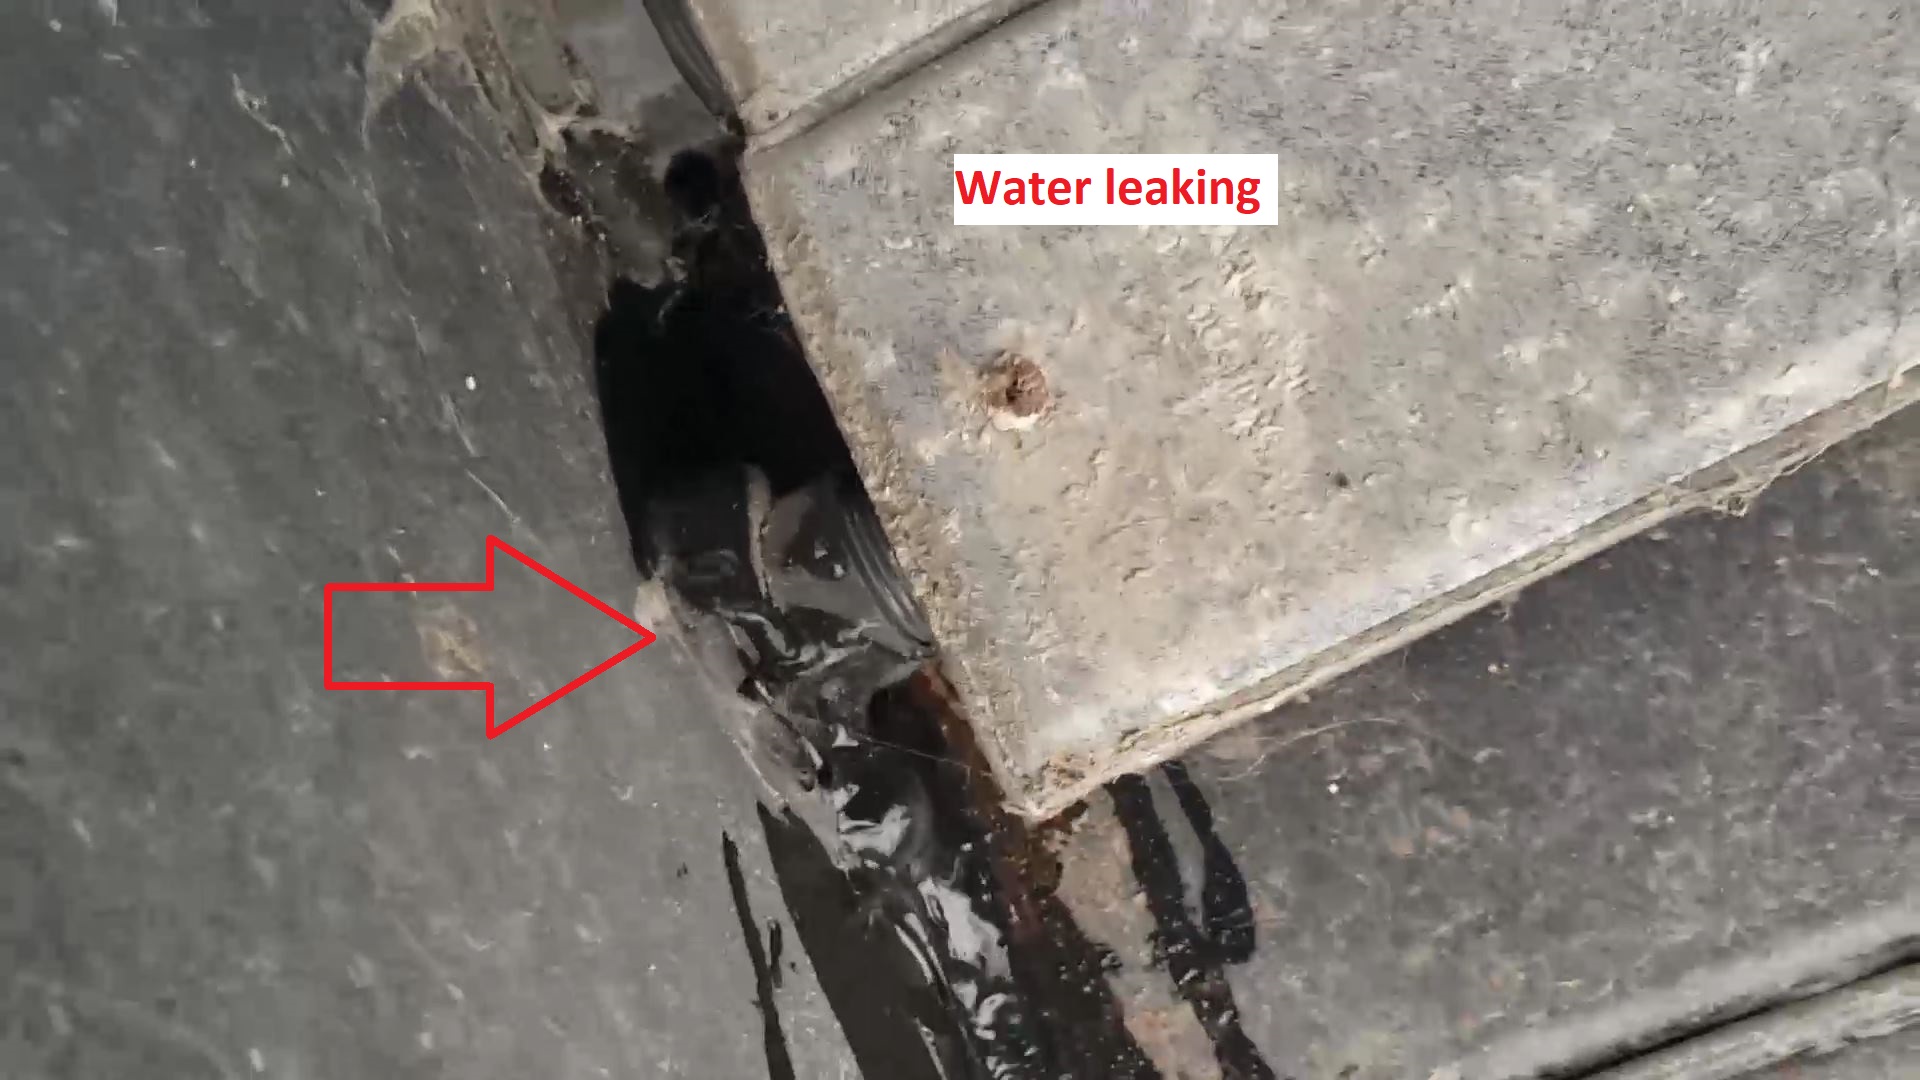 2019 DRV water leaking